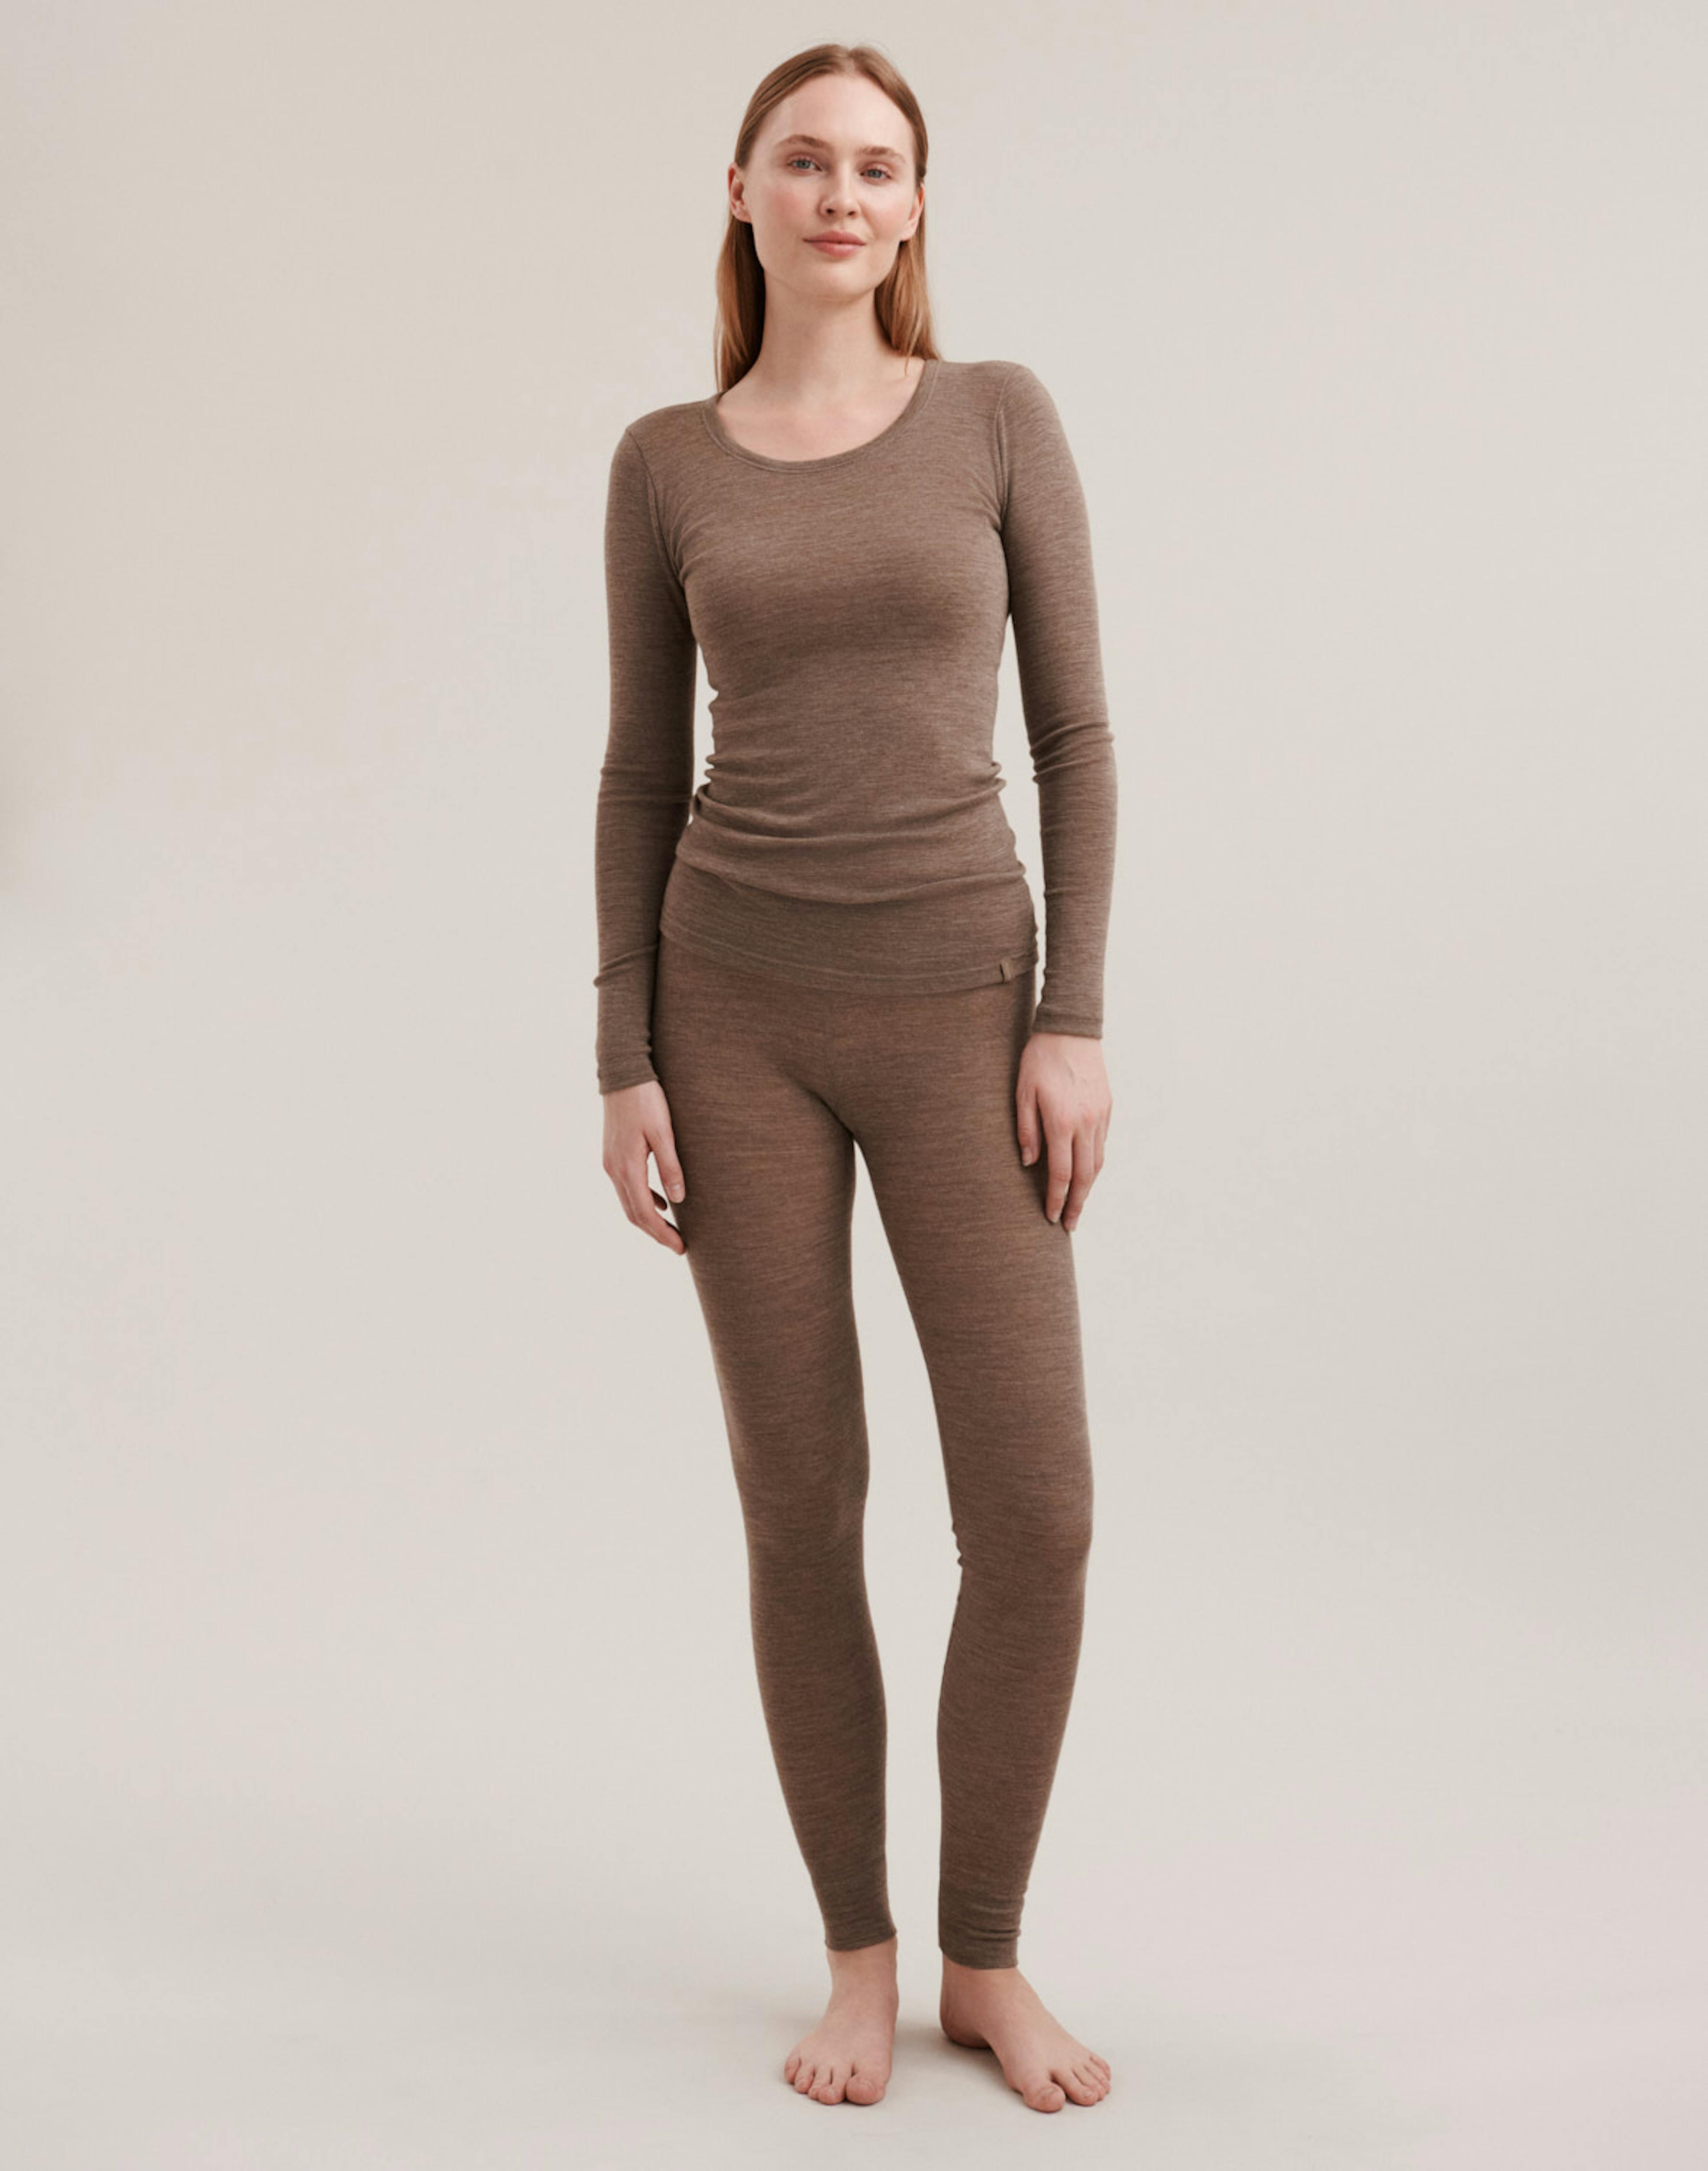 Women's merino wool leggings - Brown melange - Dilling